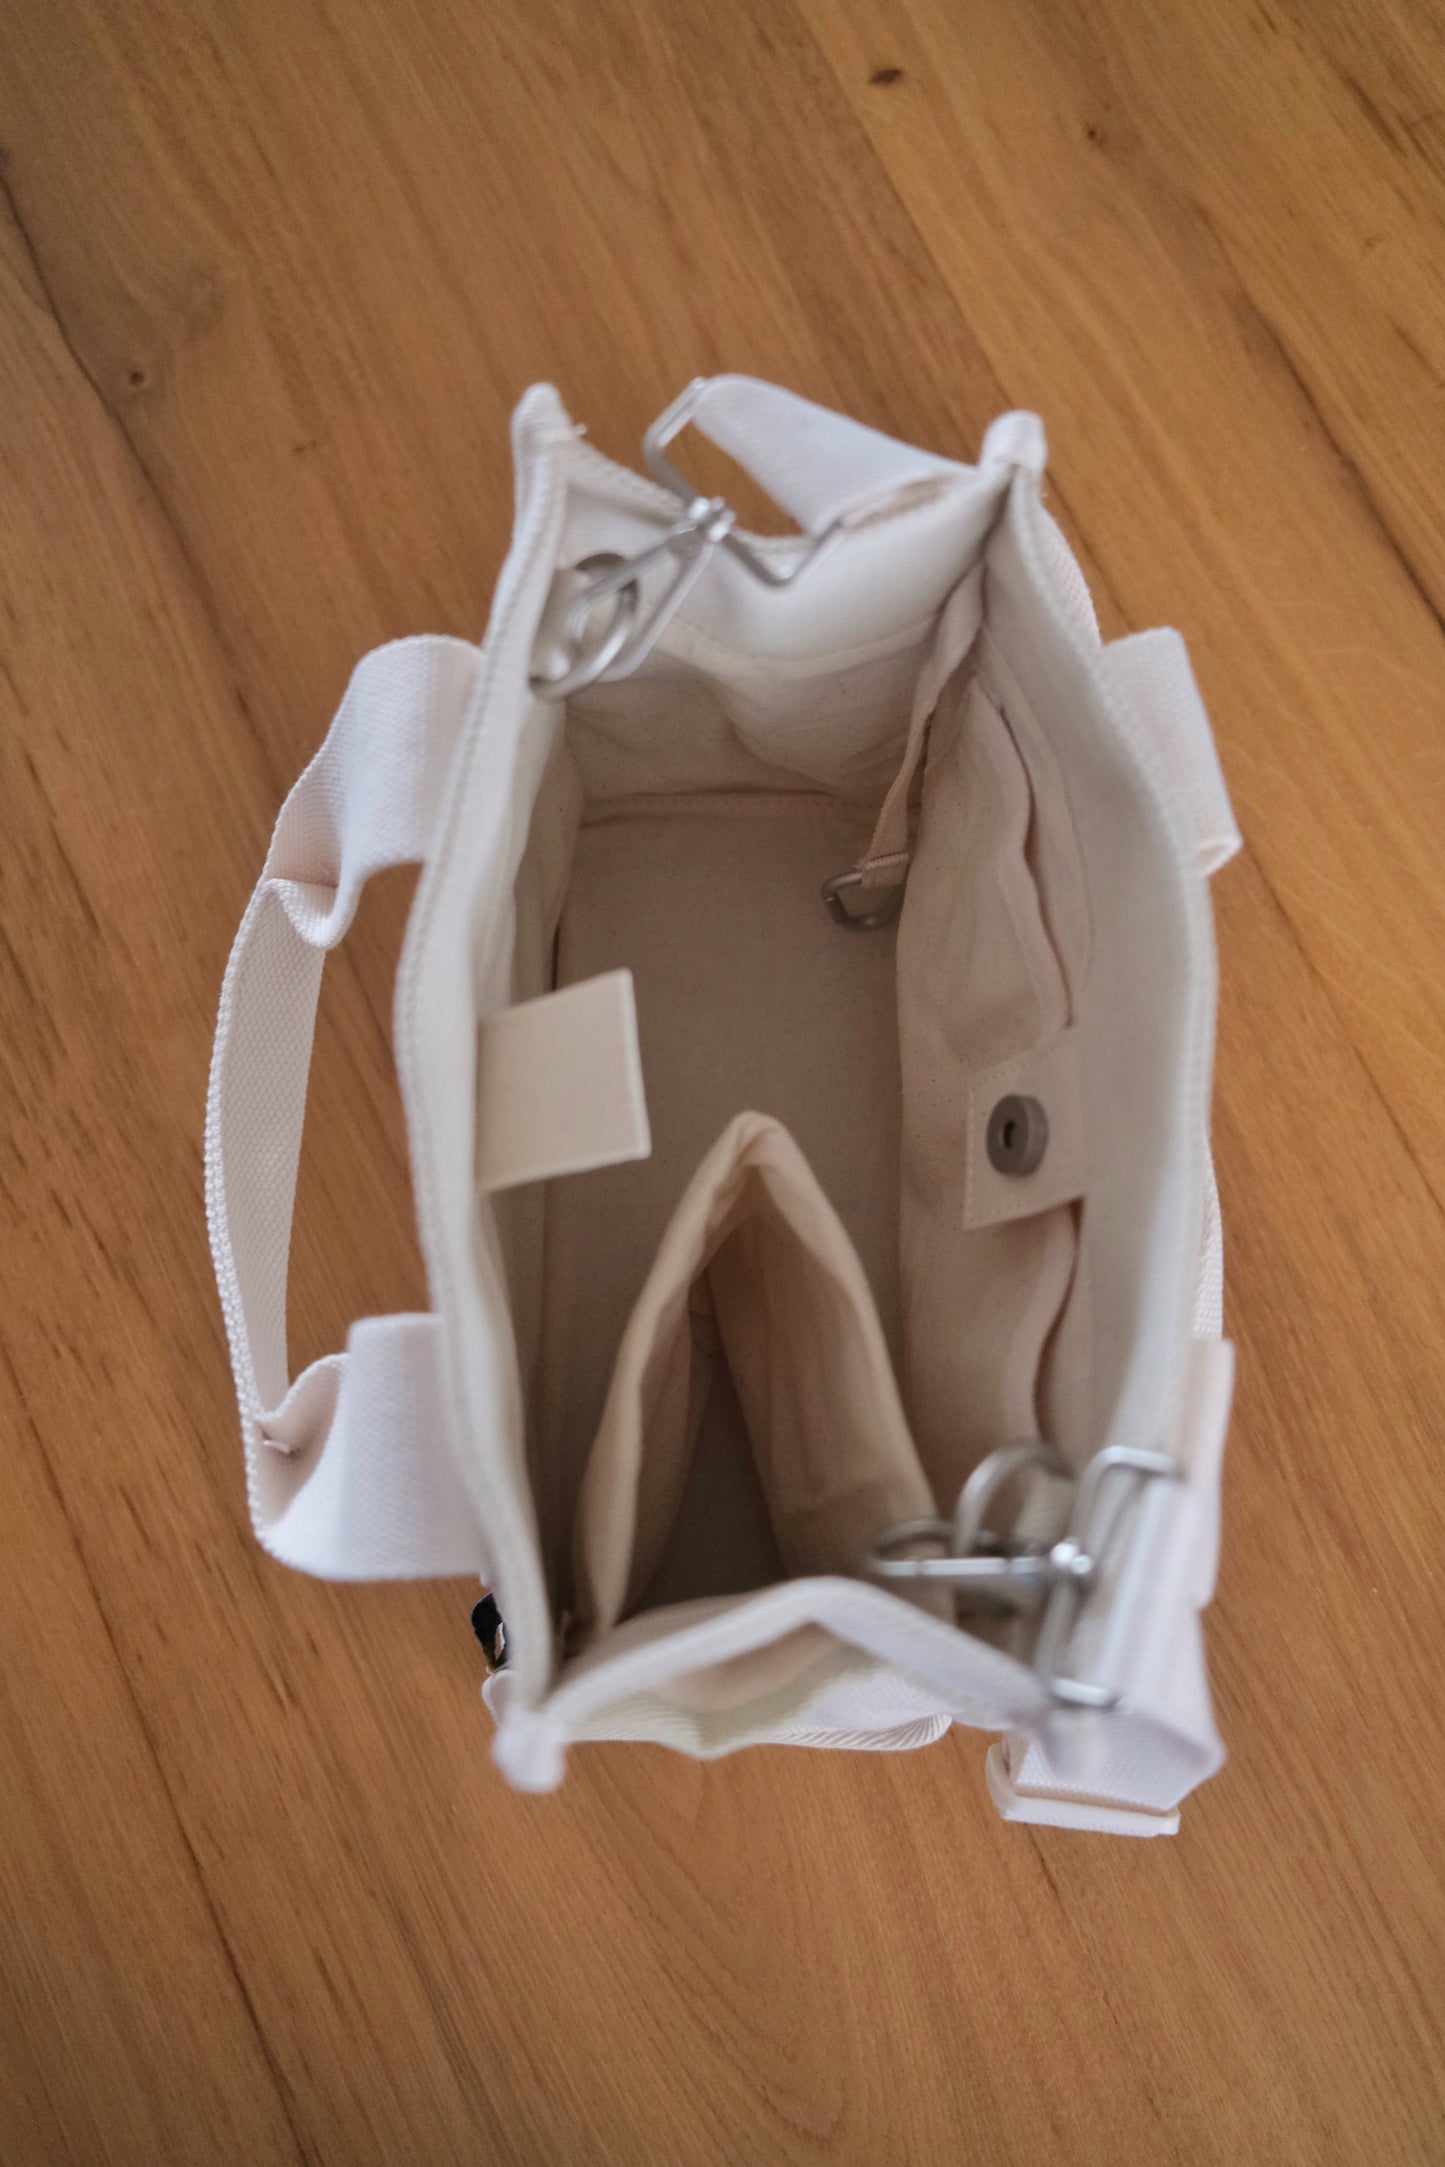 The Off-White Analog Medium Tote Bag.